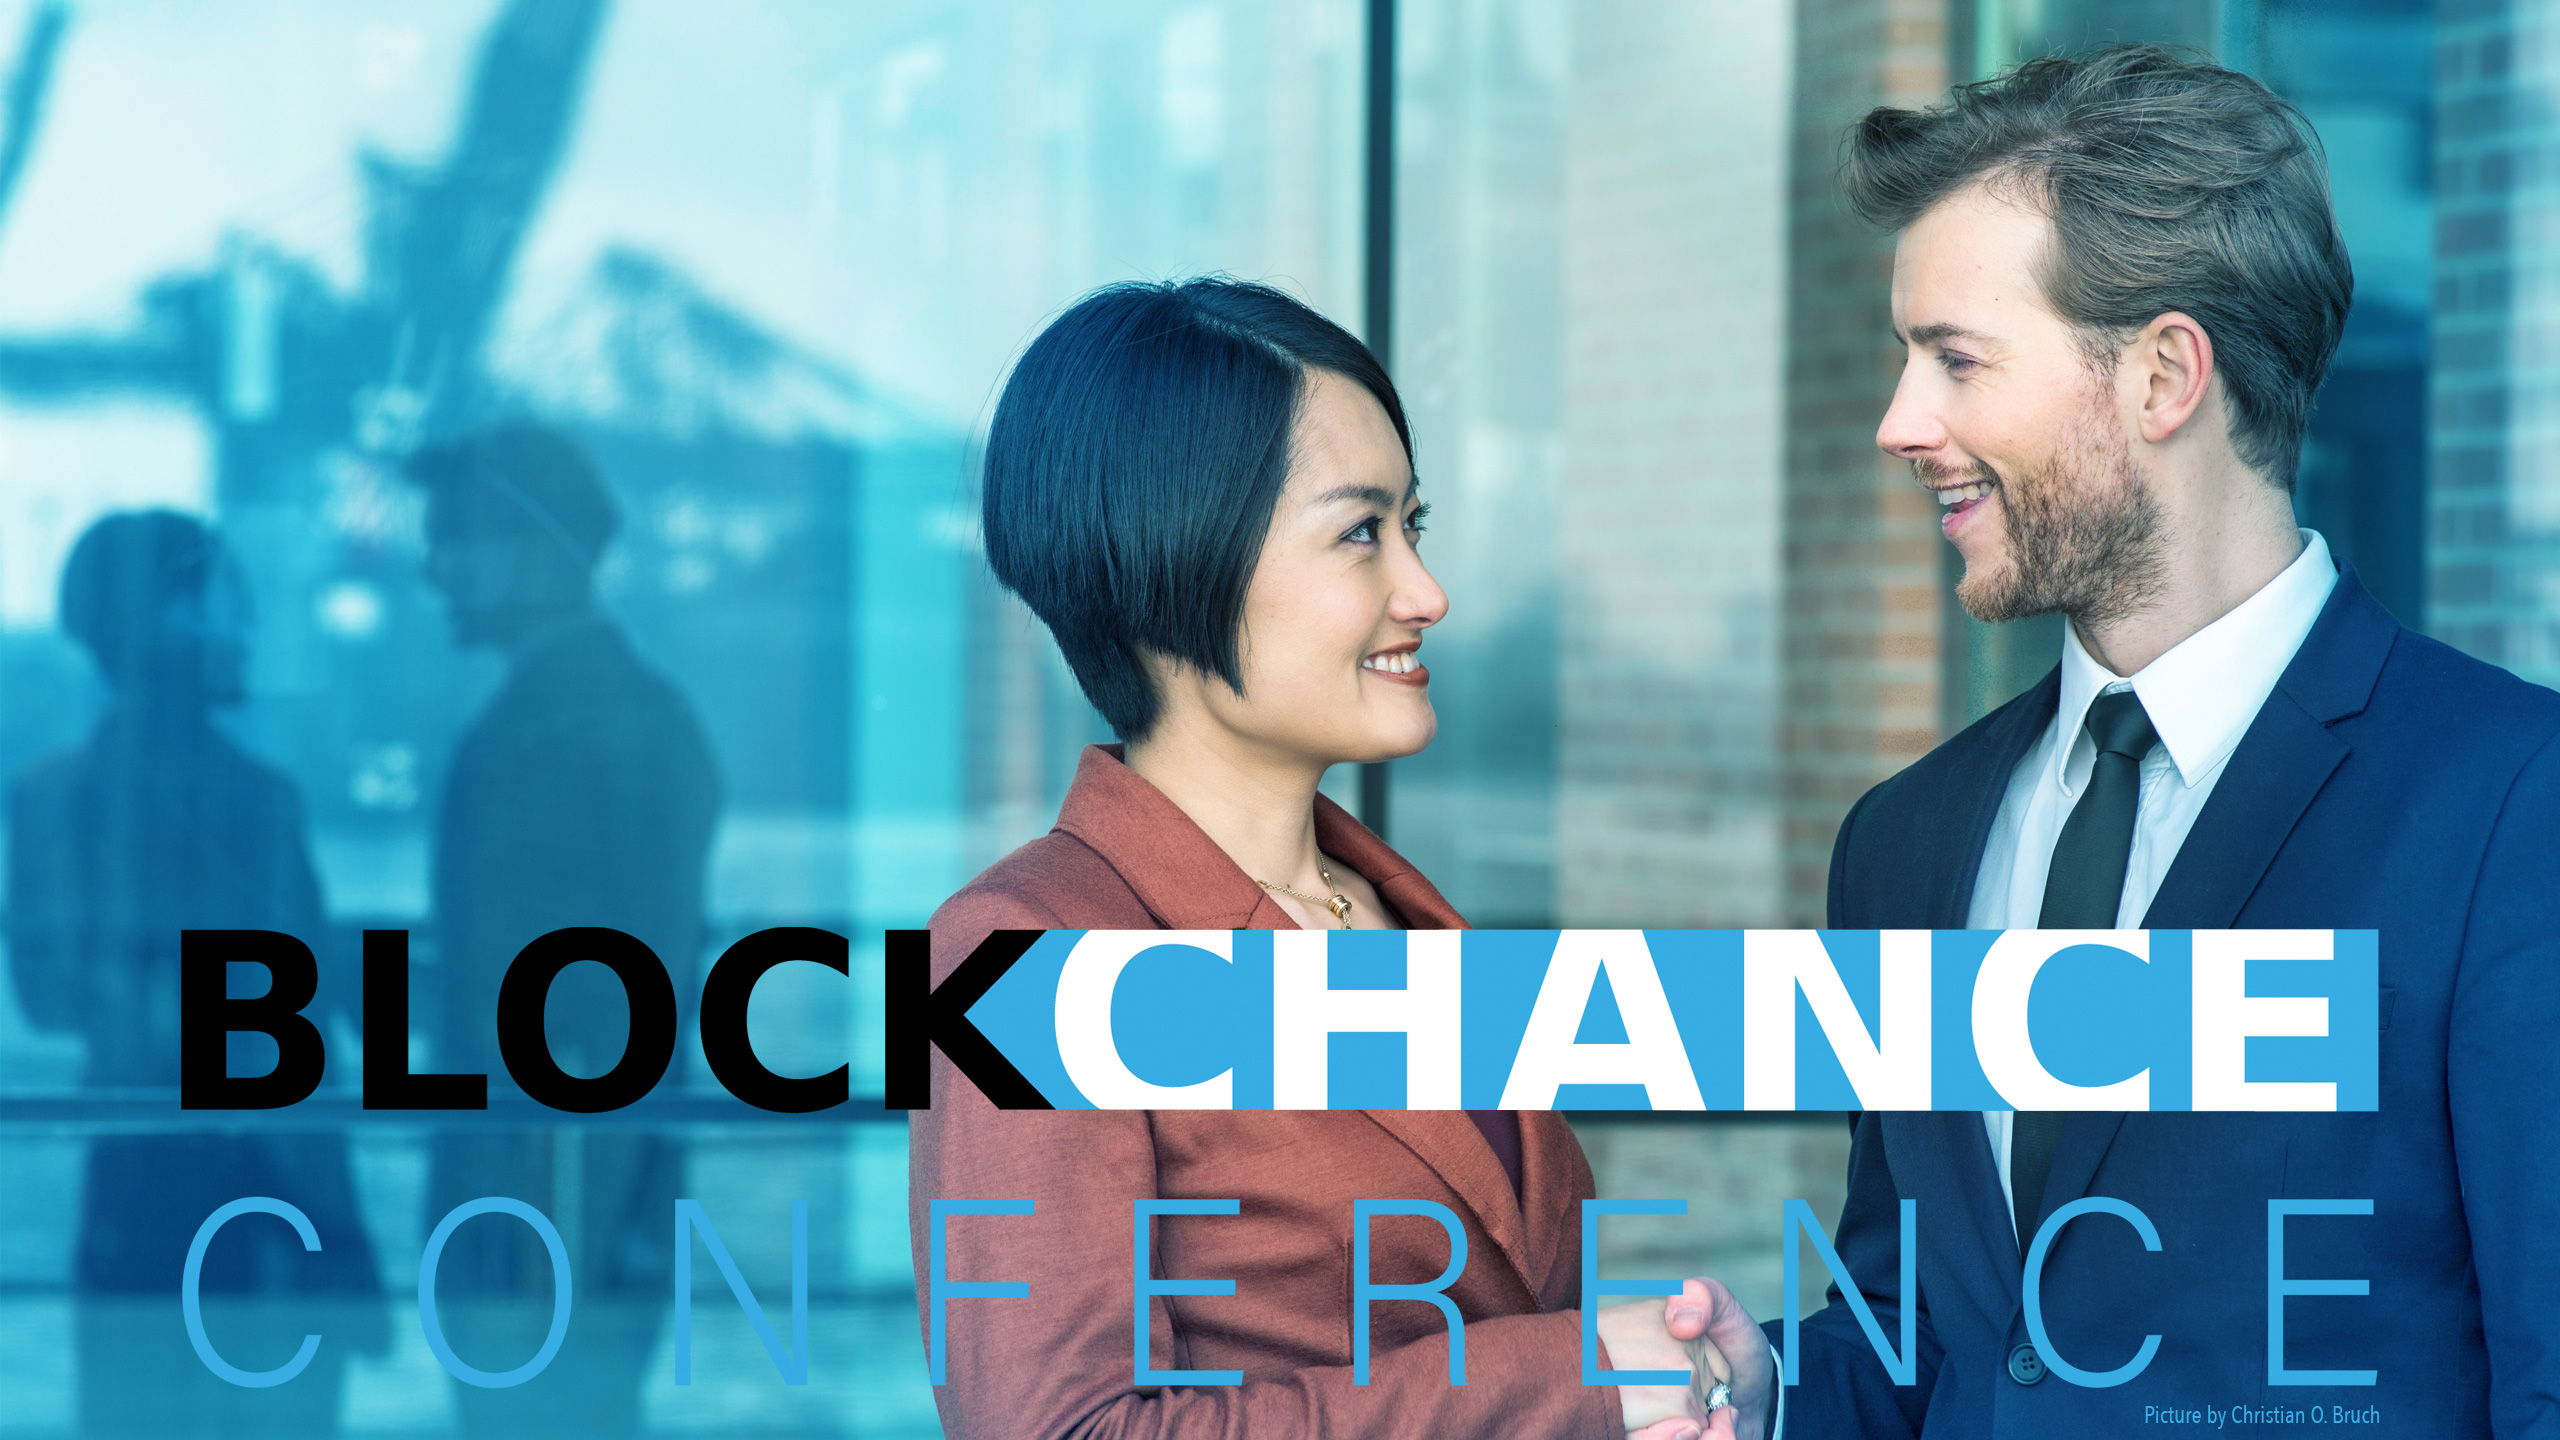 Blockchance Conference 2019